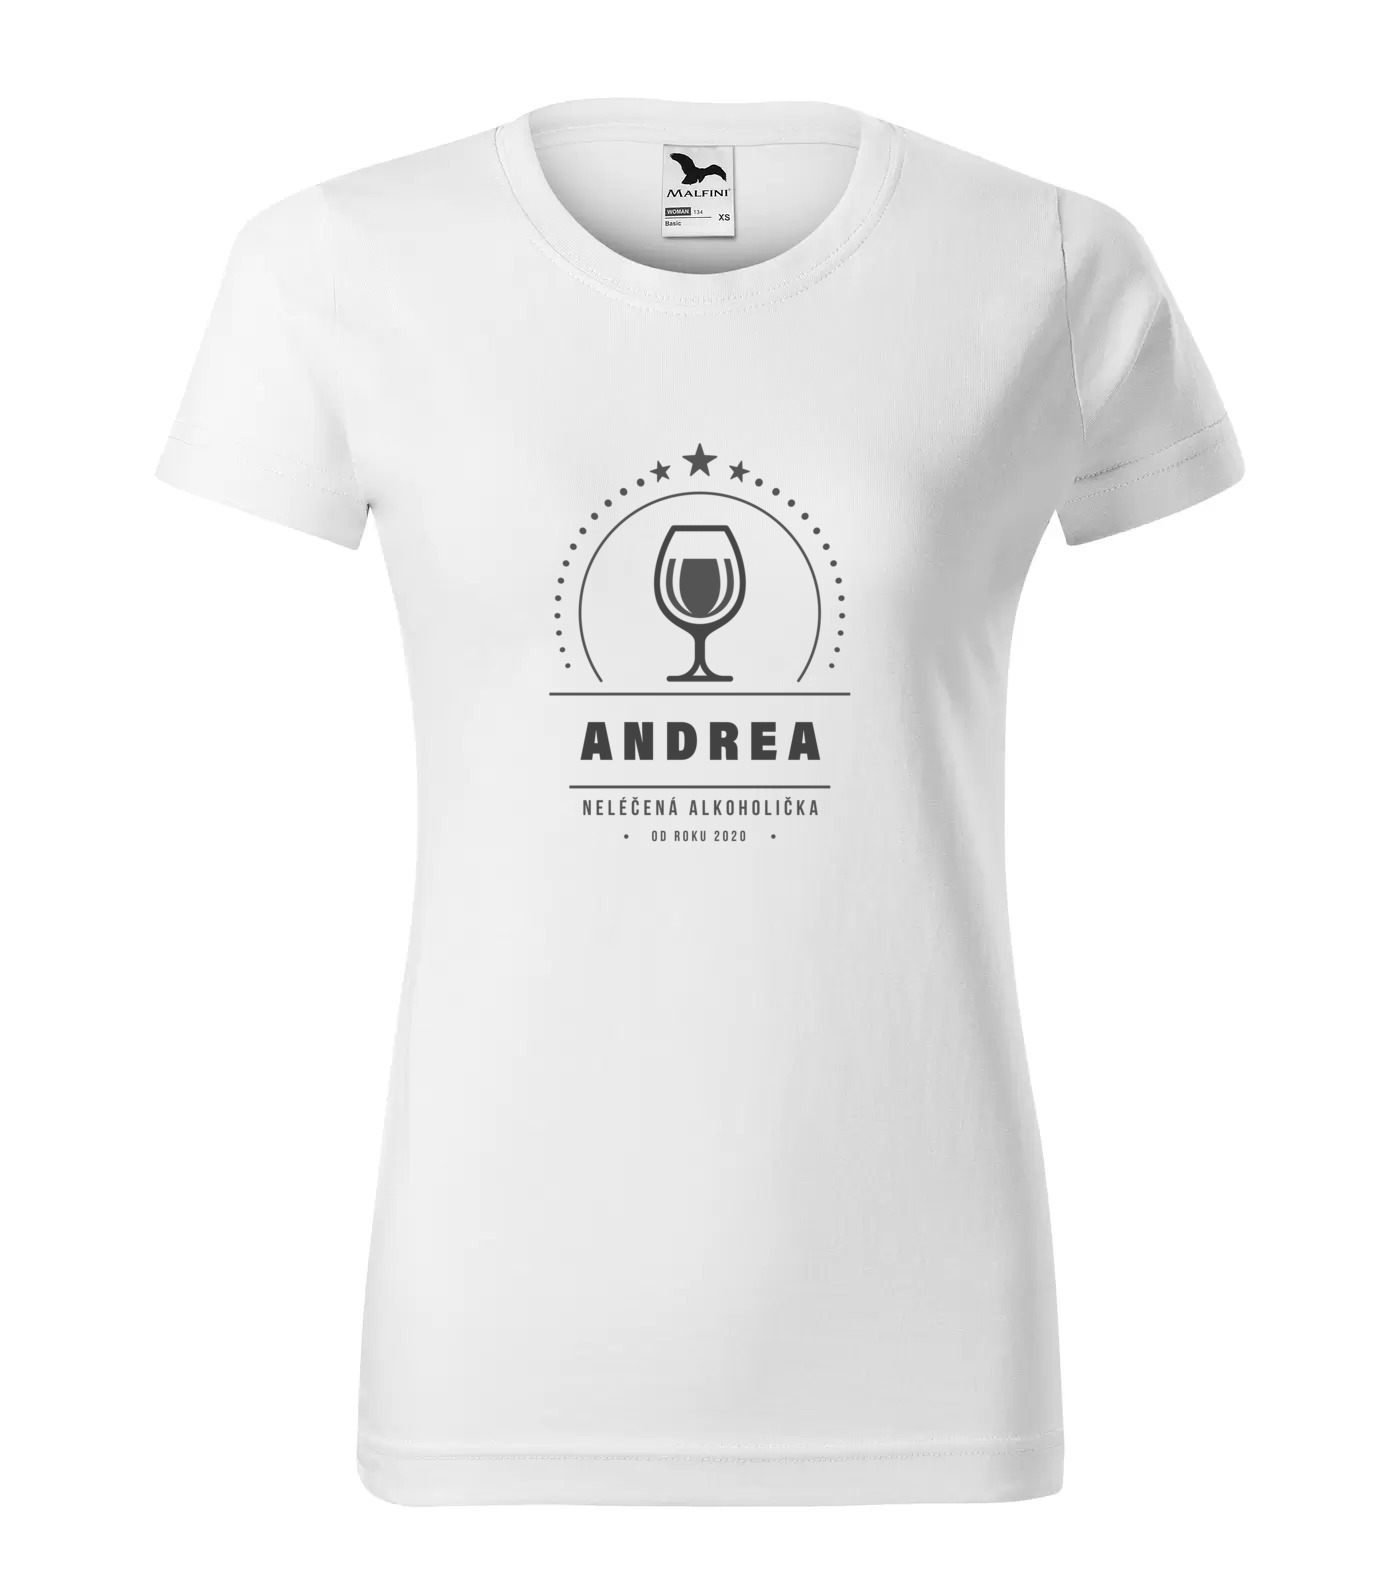 Tričko Alkoholička Andrea